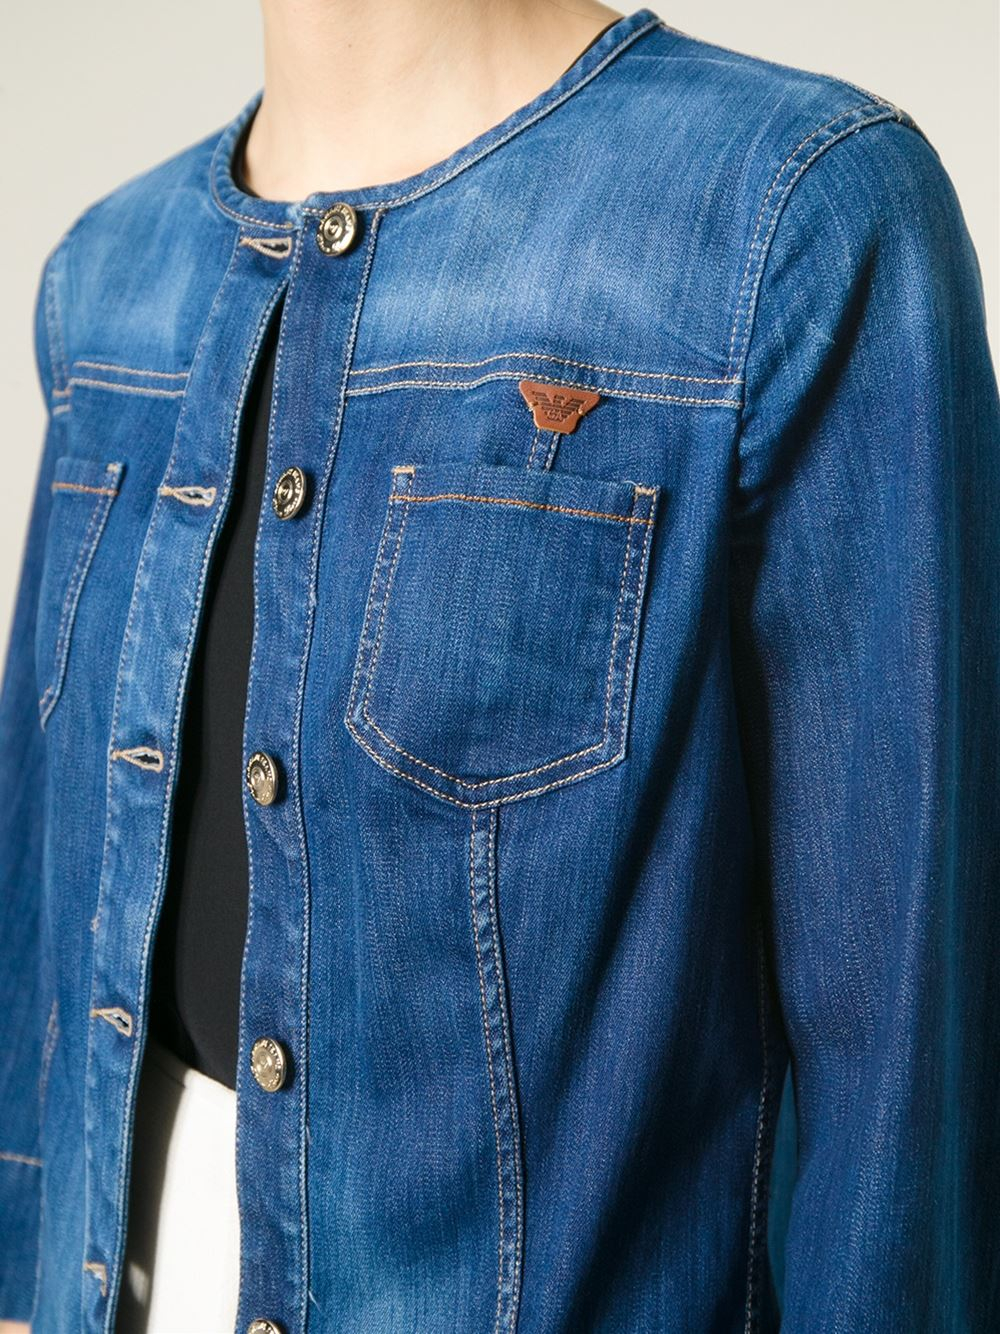 Lyst - Armani Jeans Collarless Denim Jacket in Blue